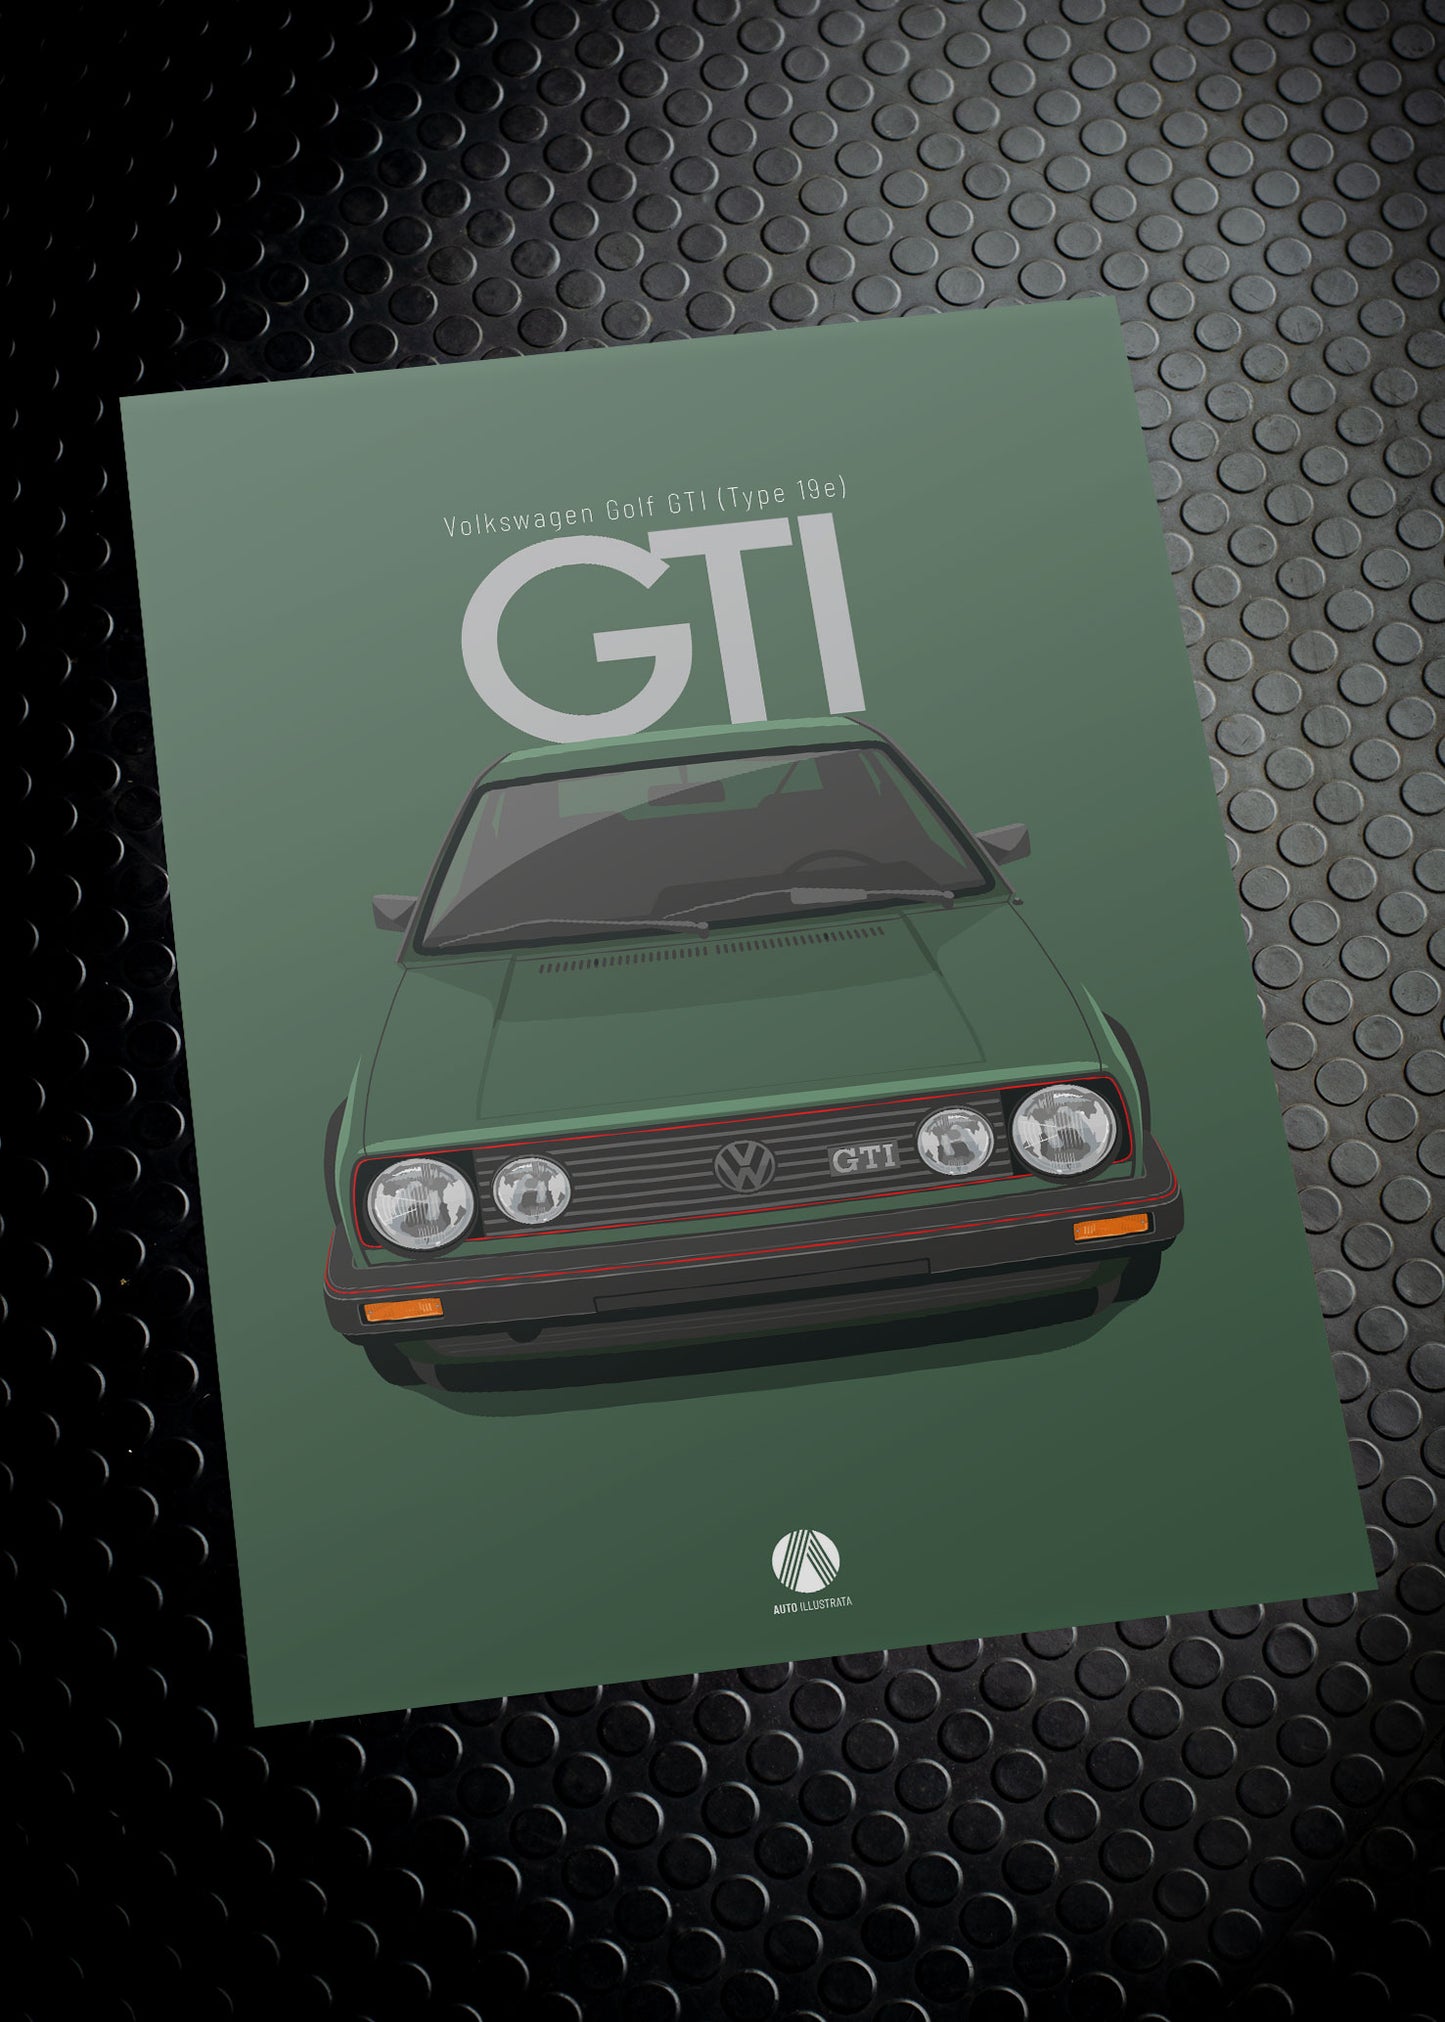 1988 Volkswagen Golf GTI (Mk2) - Oak Green - poster print